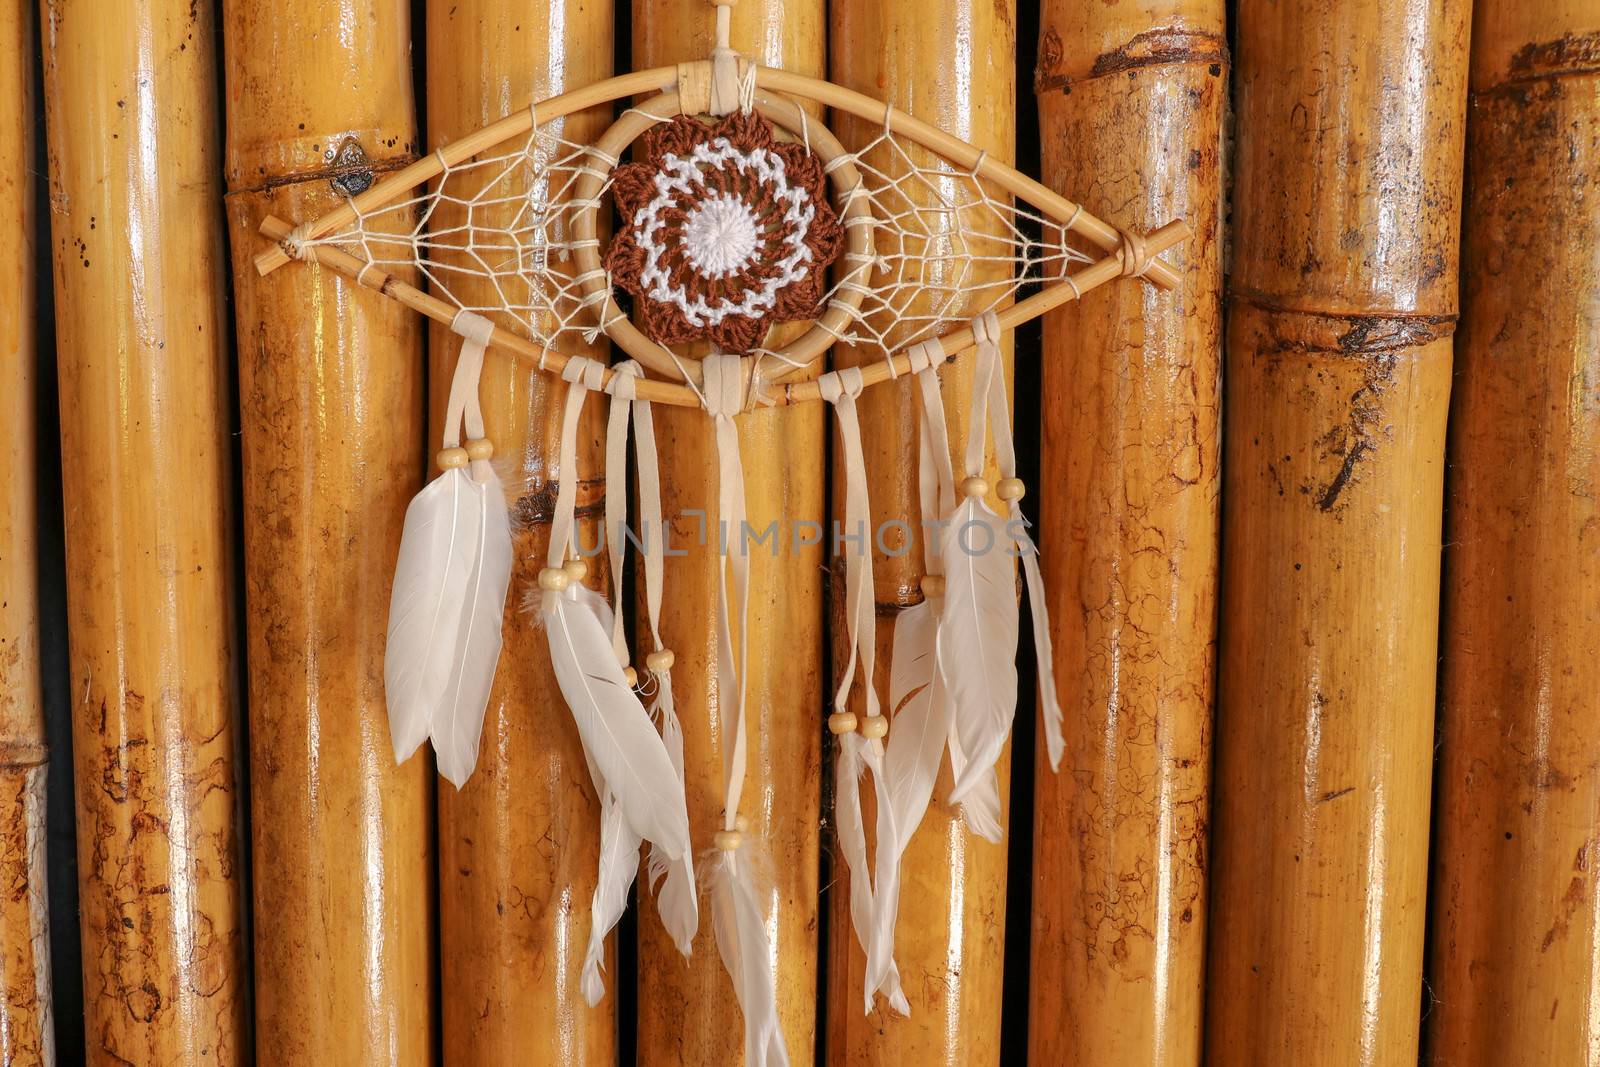 god eye of providence dreamcatcher with white feathers on a wodd by Sanatana2008